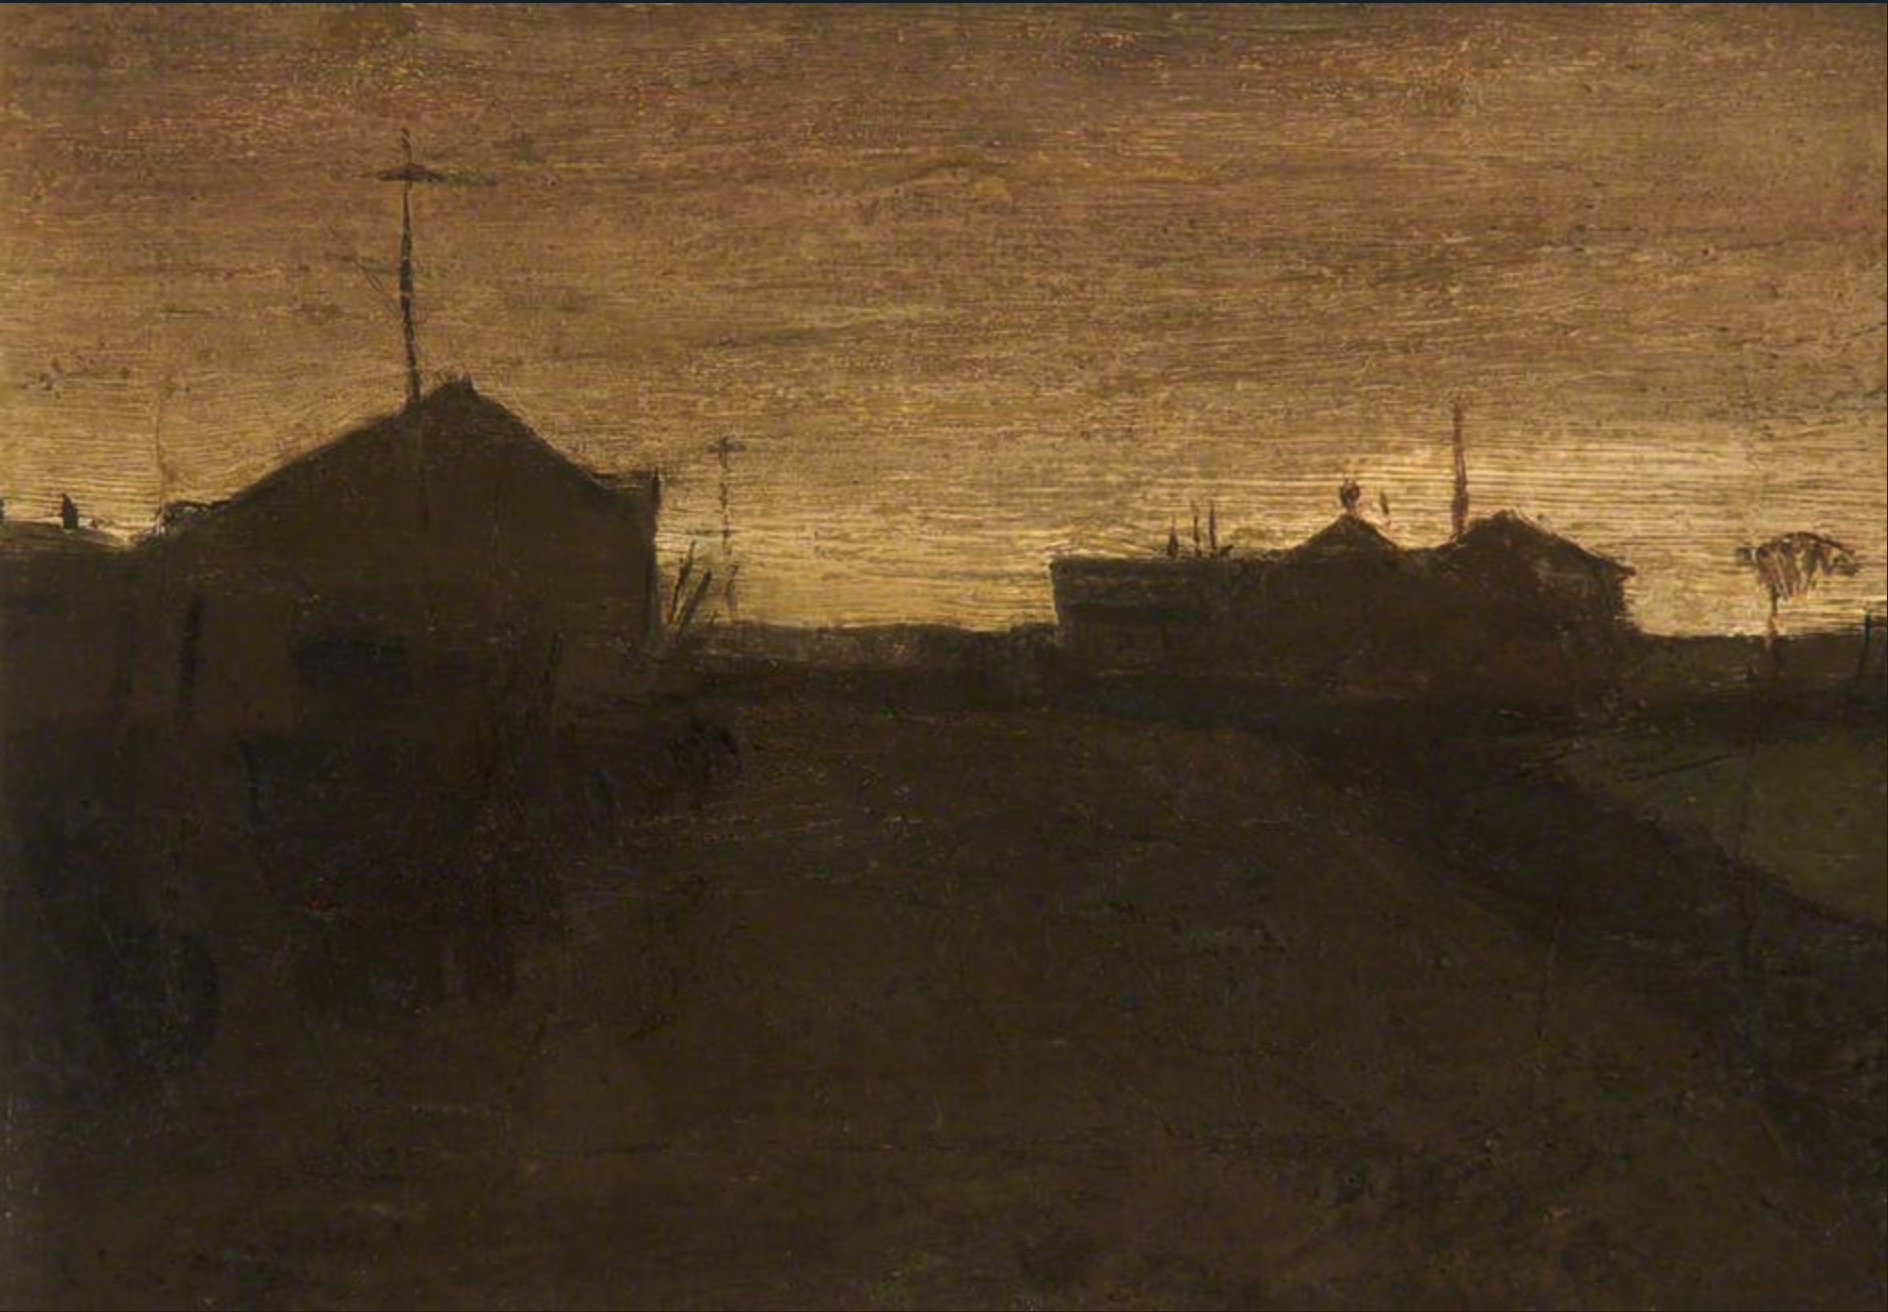 Arden's Farm, Swinton (1909) by Laurence Stephen Lowry (1887 - 1976), English artist.